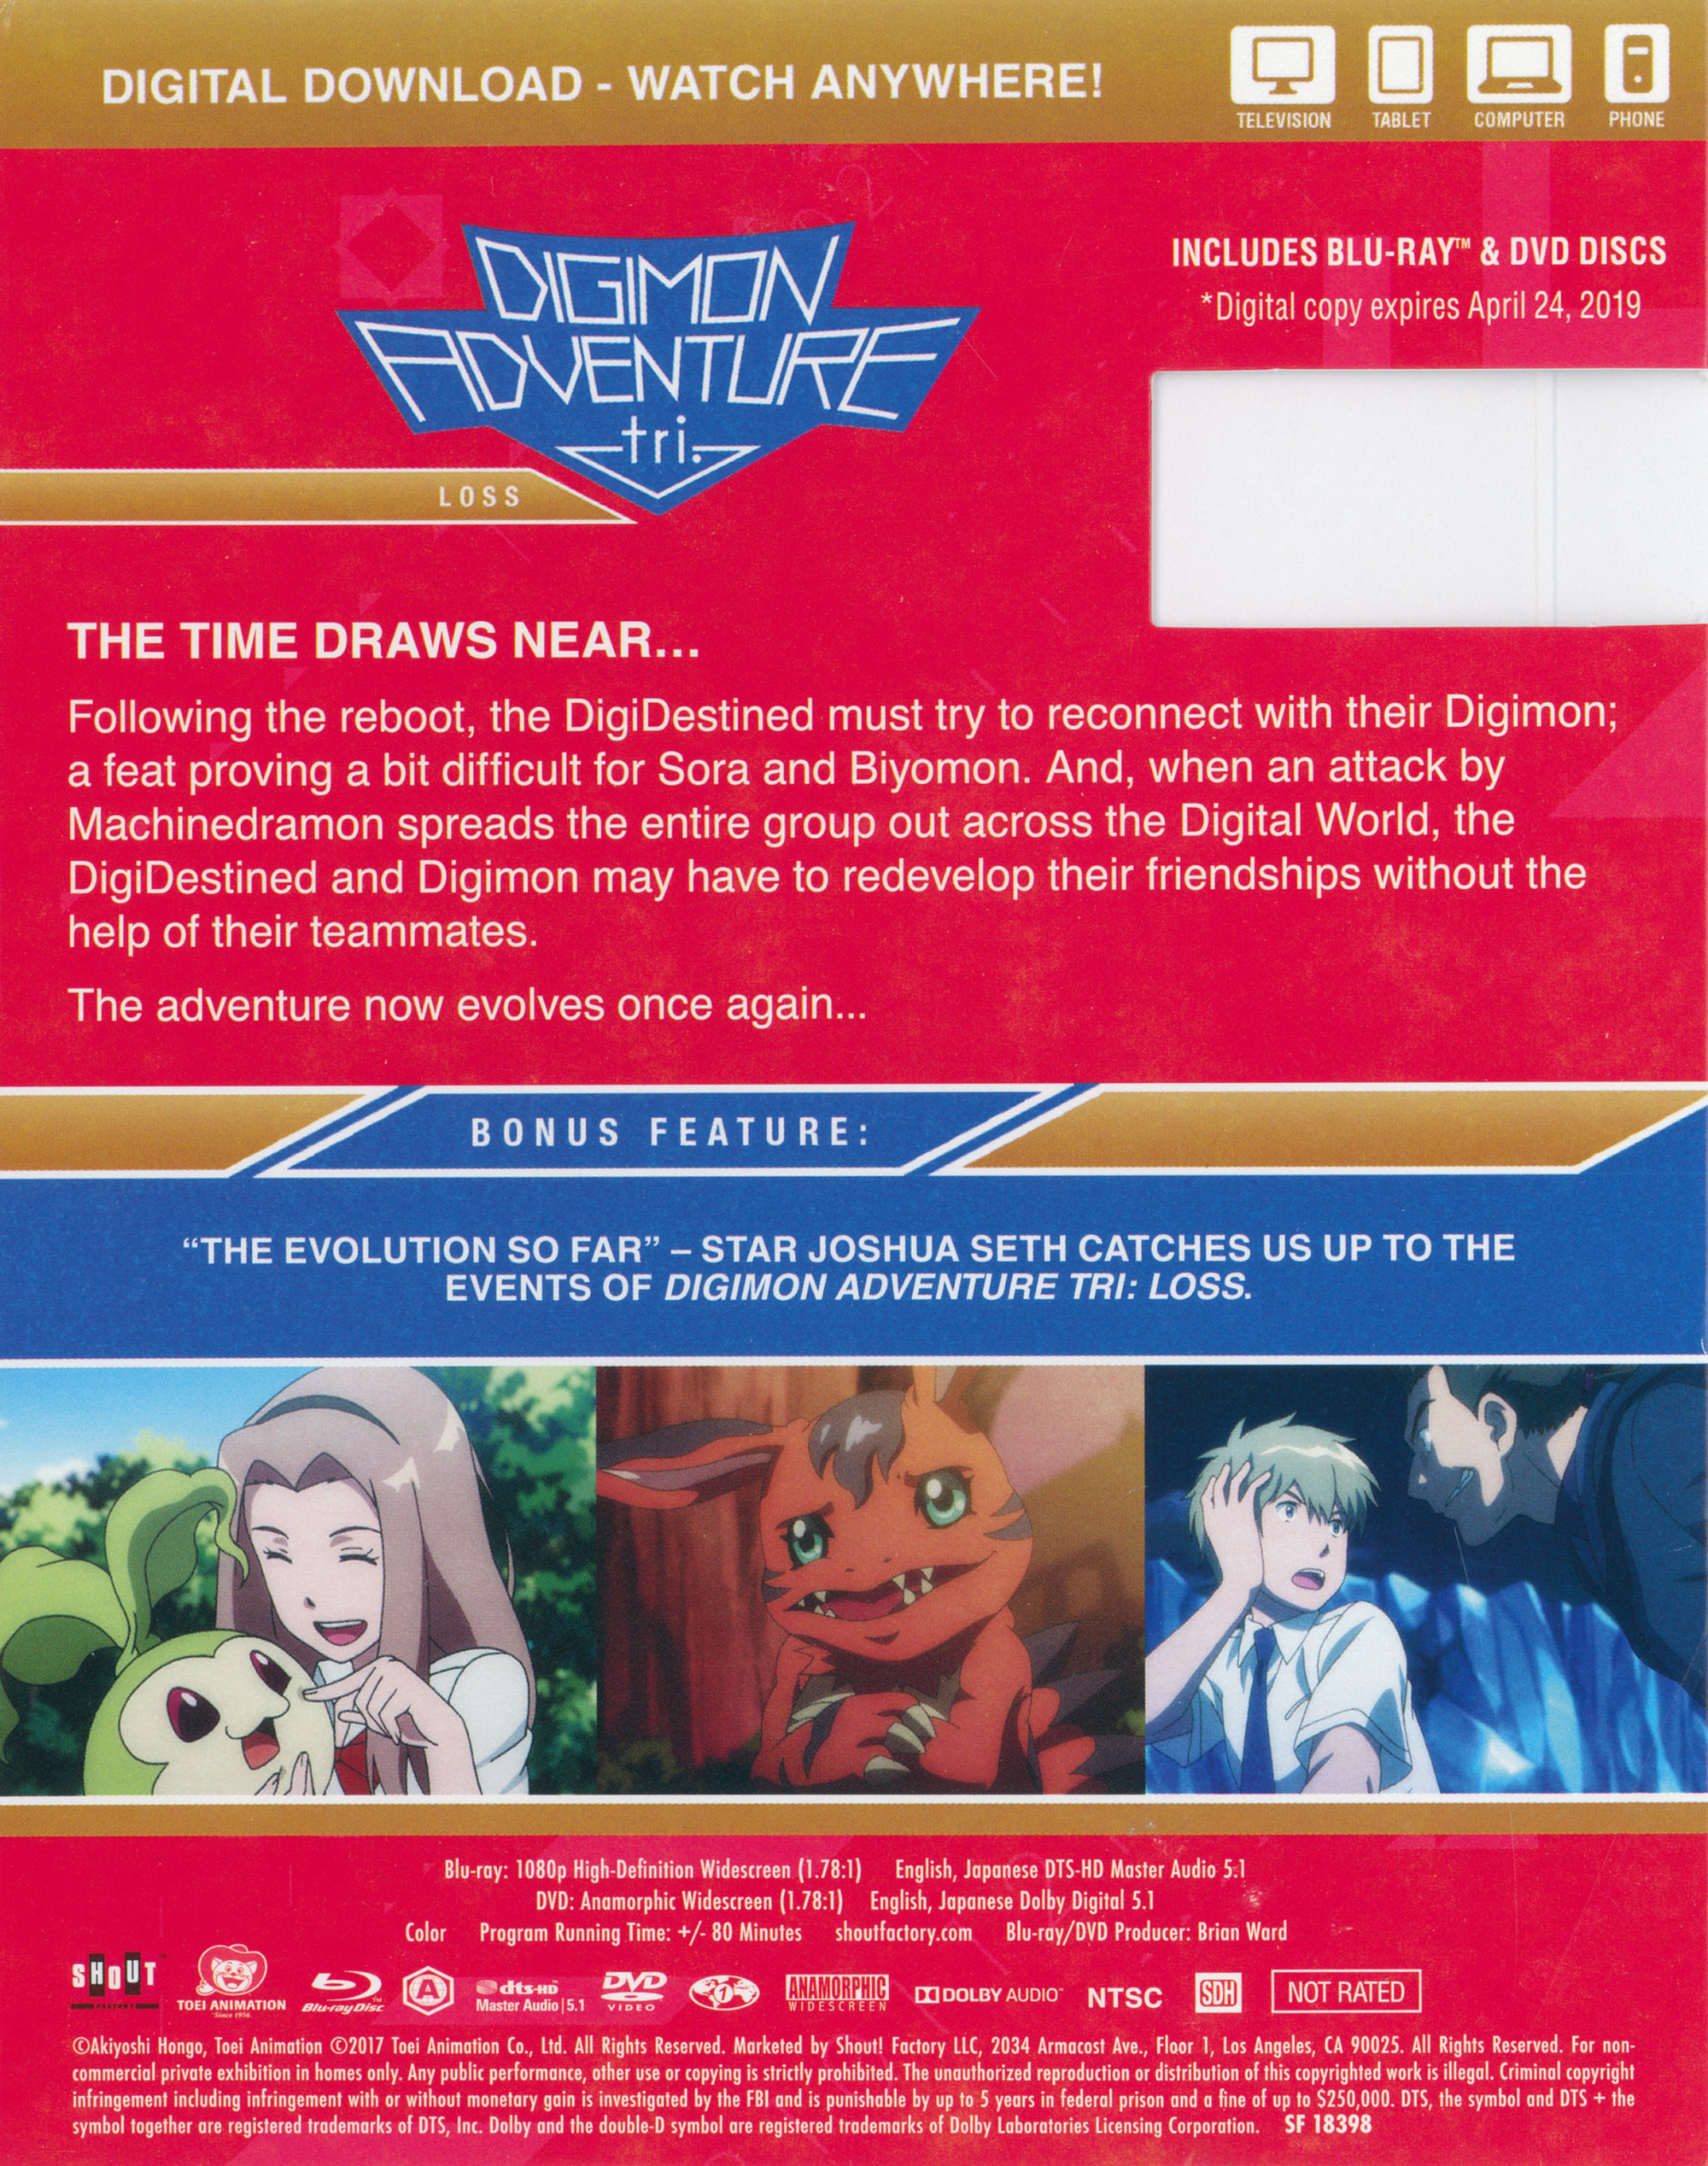 Joshua Seth, Colleen O'Shaughnessey, More Return for Digimon Adventure tri.  Film's English Dub - News - Anime News Network